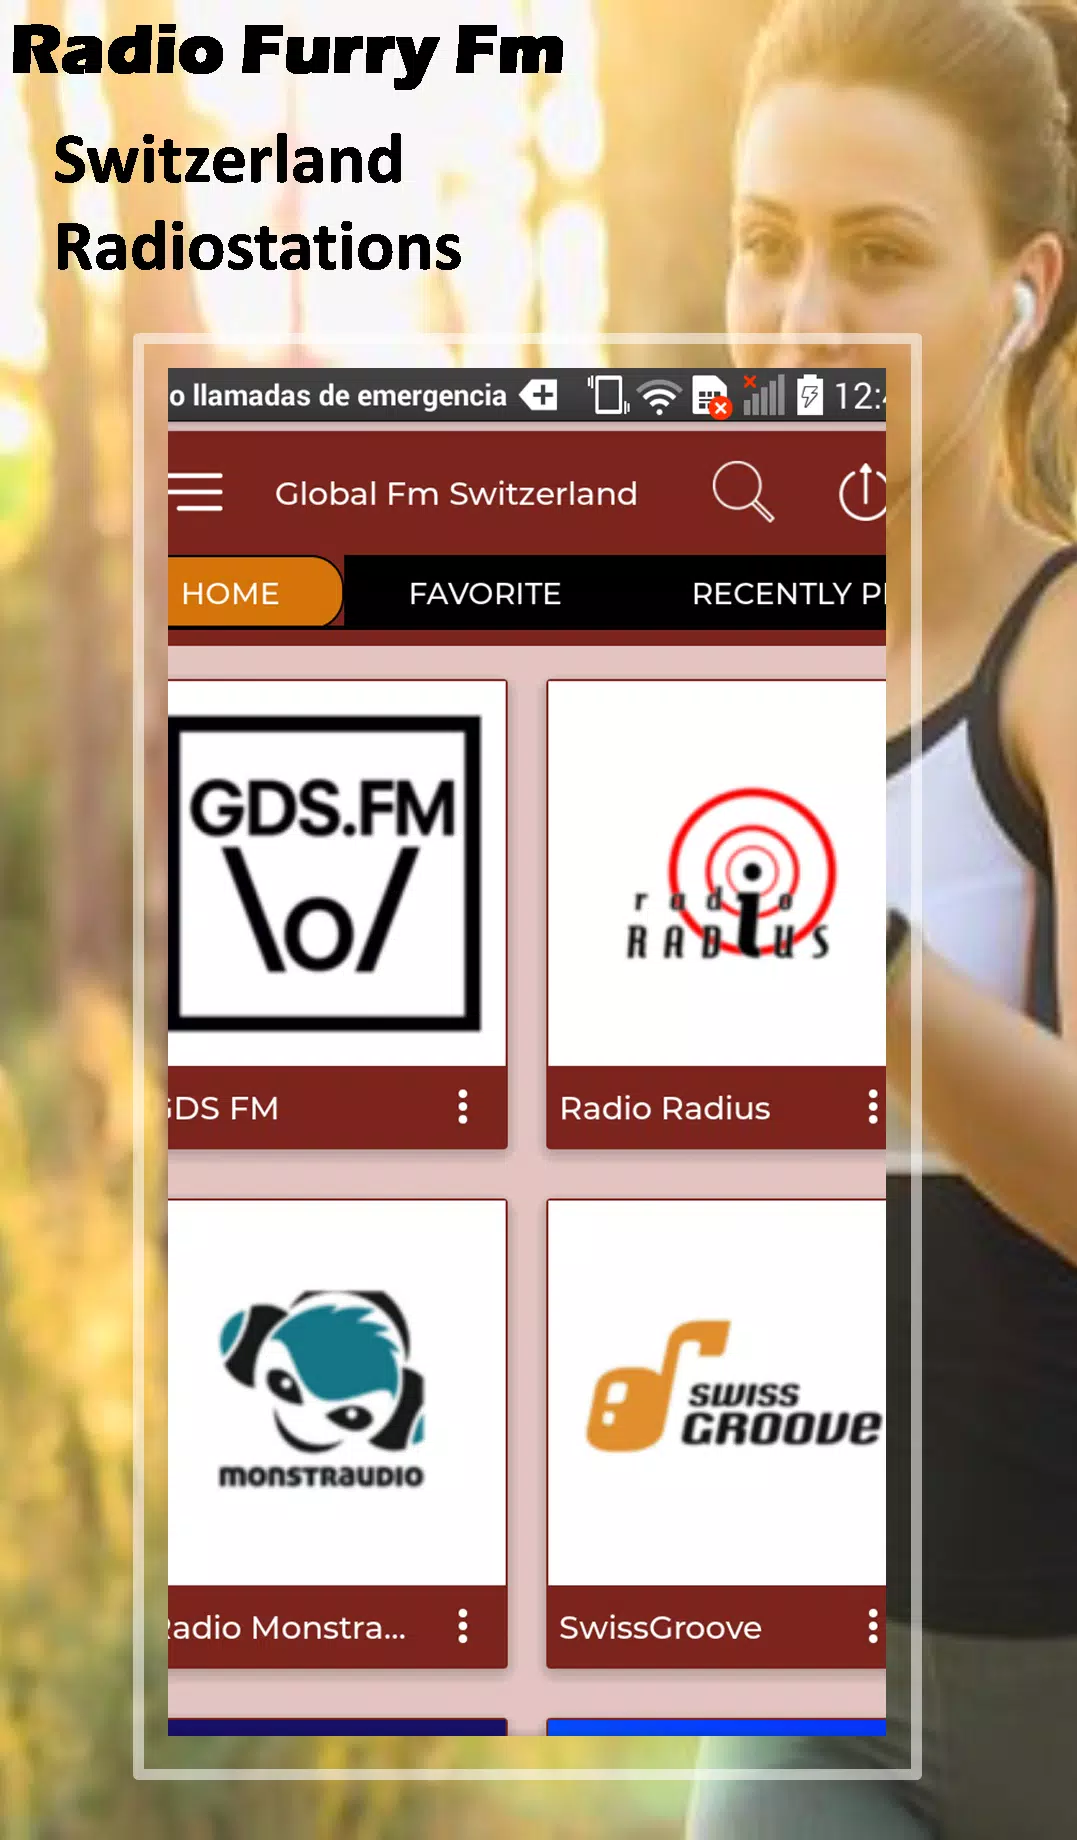 Radio Furry Fm Schweiz Musik for Android - APK Download